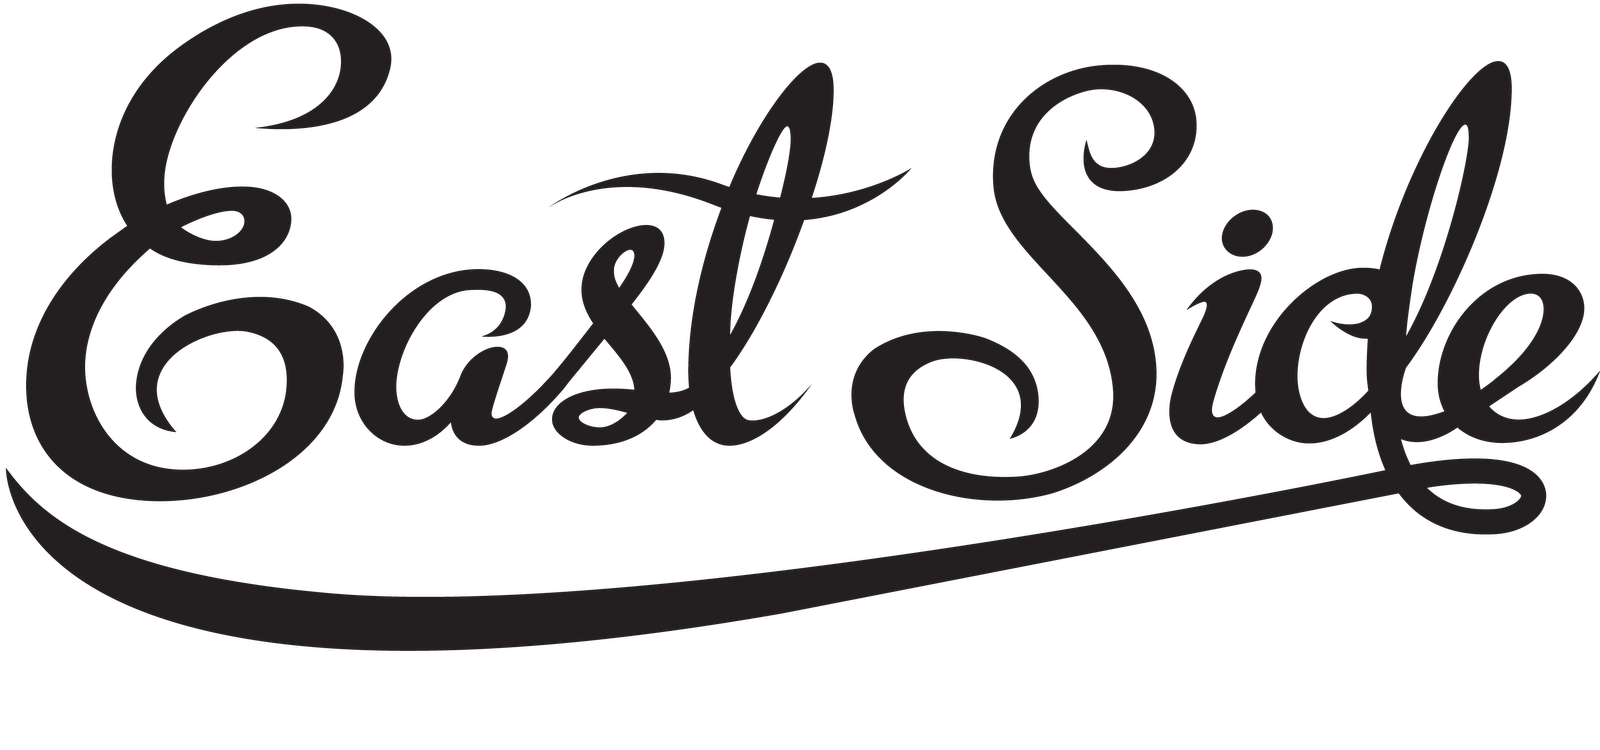 E side. East Side надпись. Логотип East Coast. Eastside лого. Красивая надпись Восток.